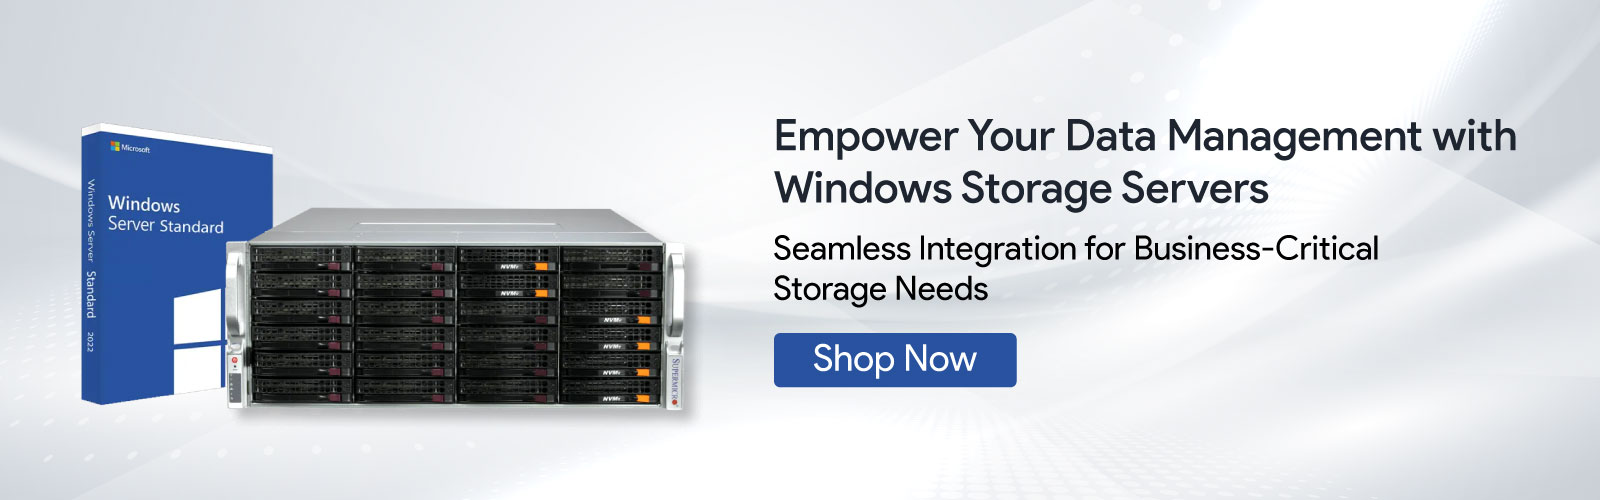 Windows-Storage-Servers